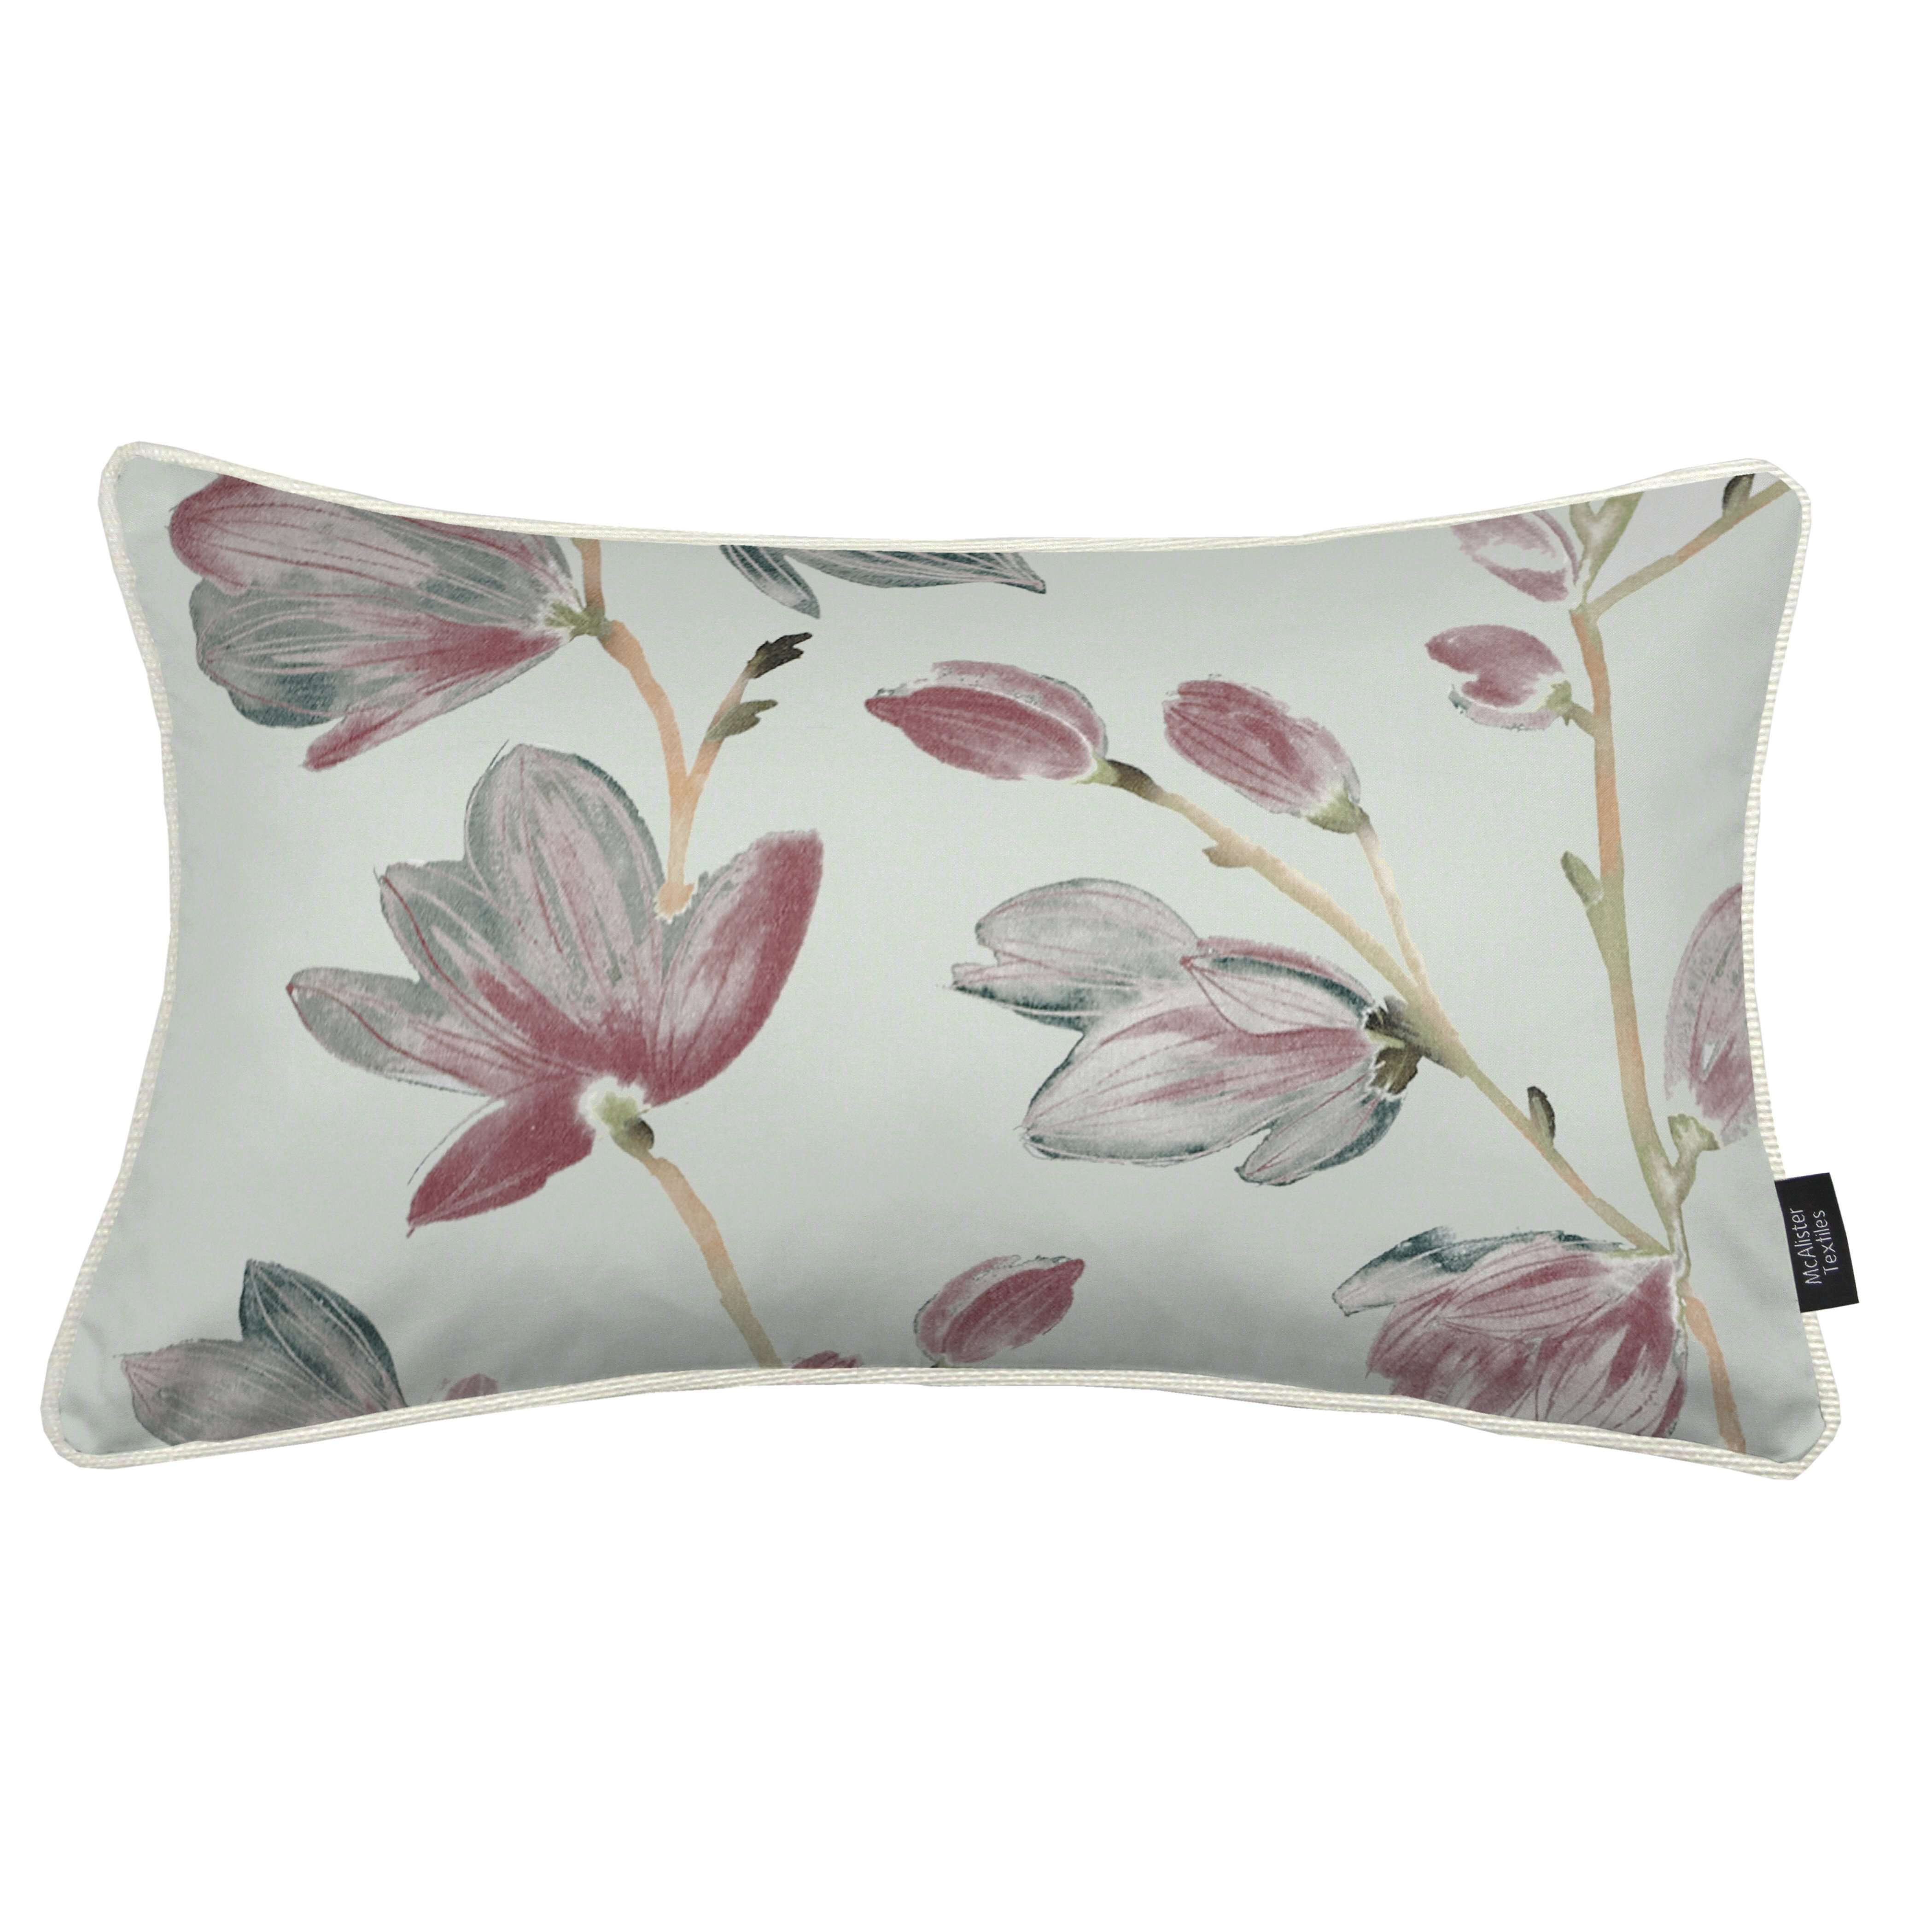 Magnolia Rose Floral Cotton Print Pillows, Cover Only / 50cm x 30cm